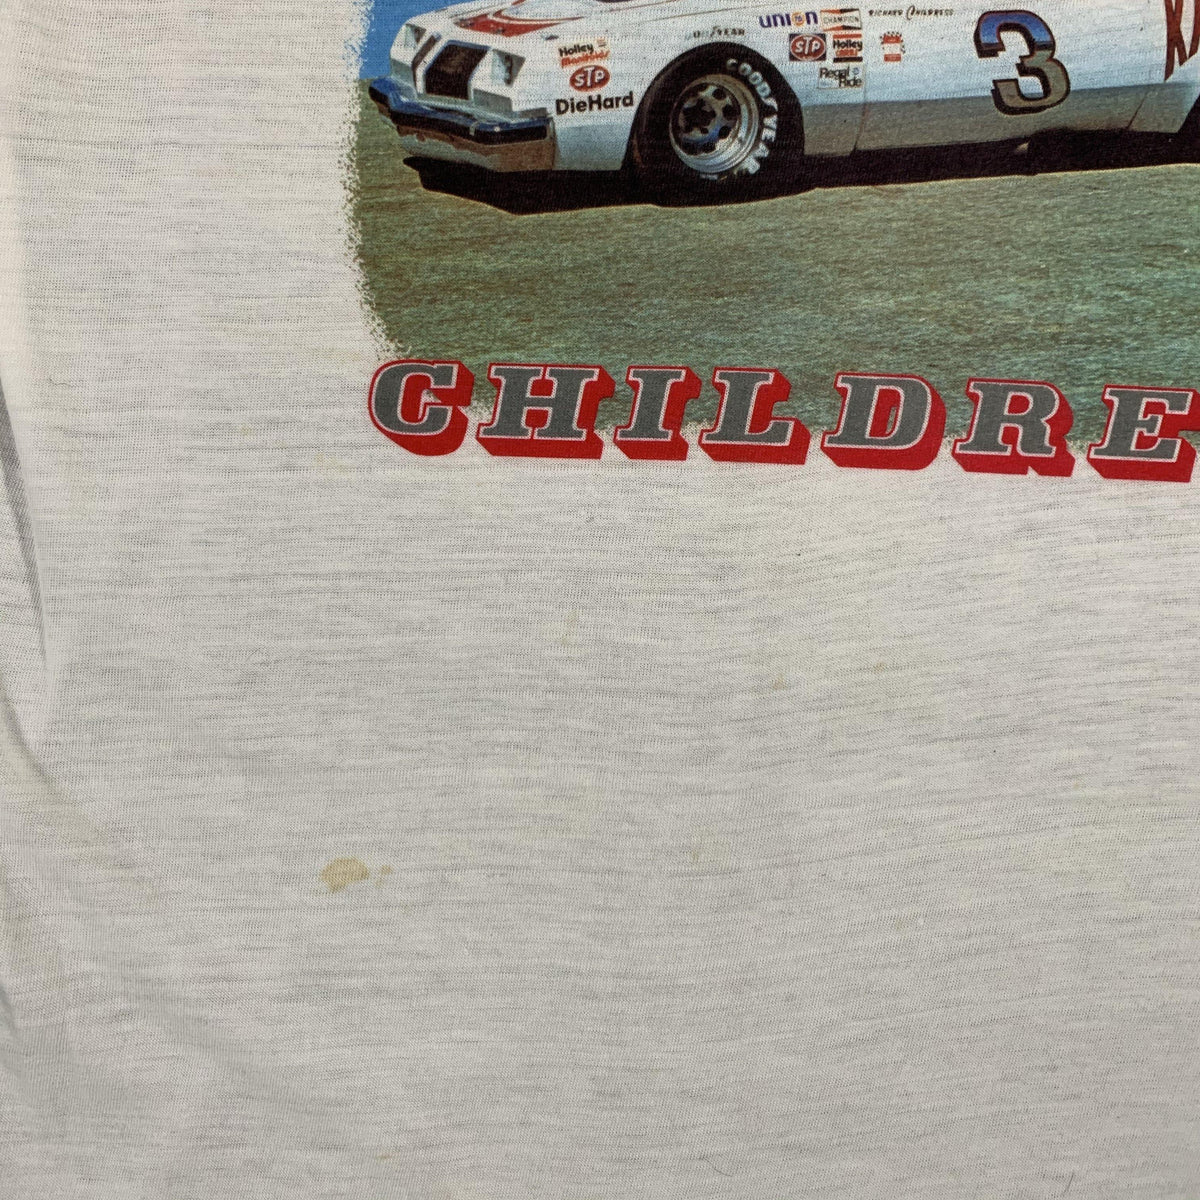 Vintage NASCAR “Richard Childress” T-Shirt - jointcustodydc